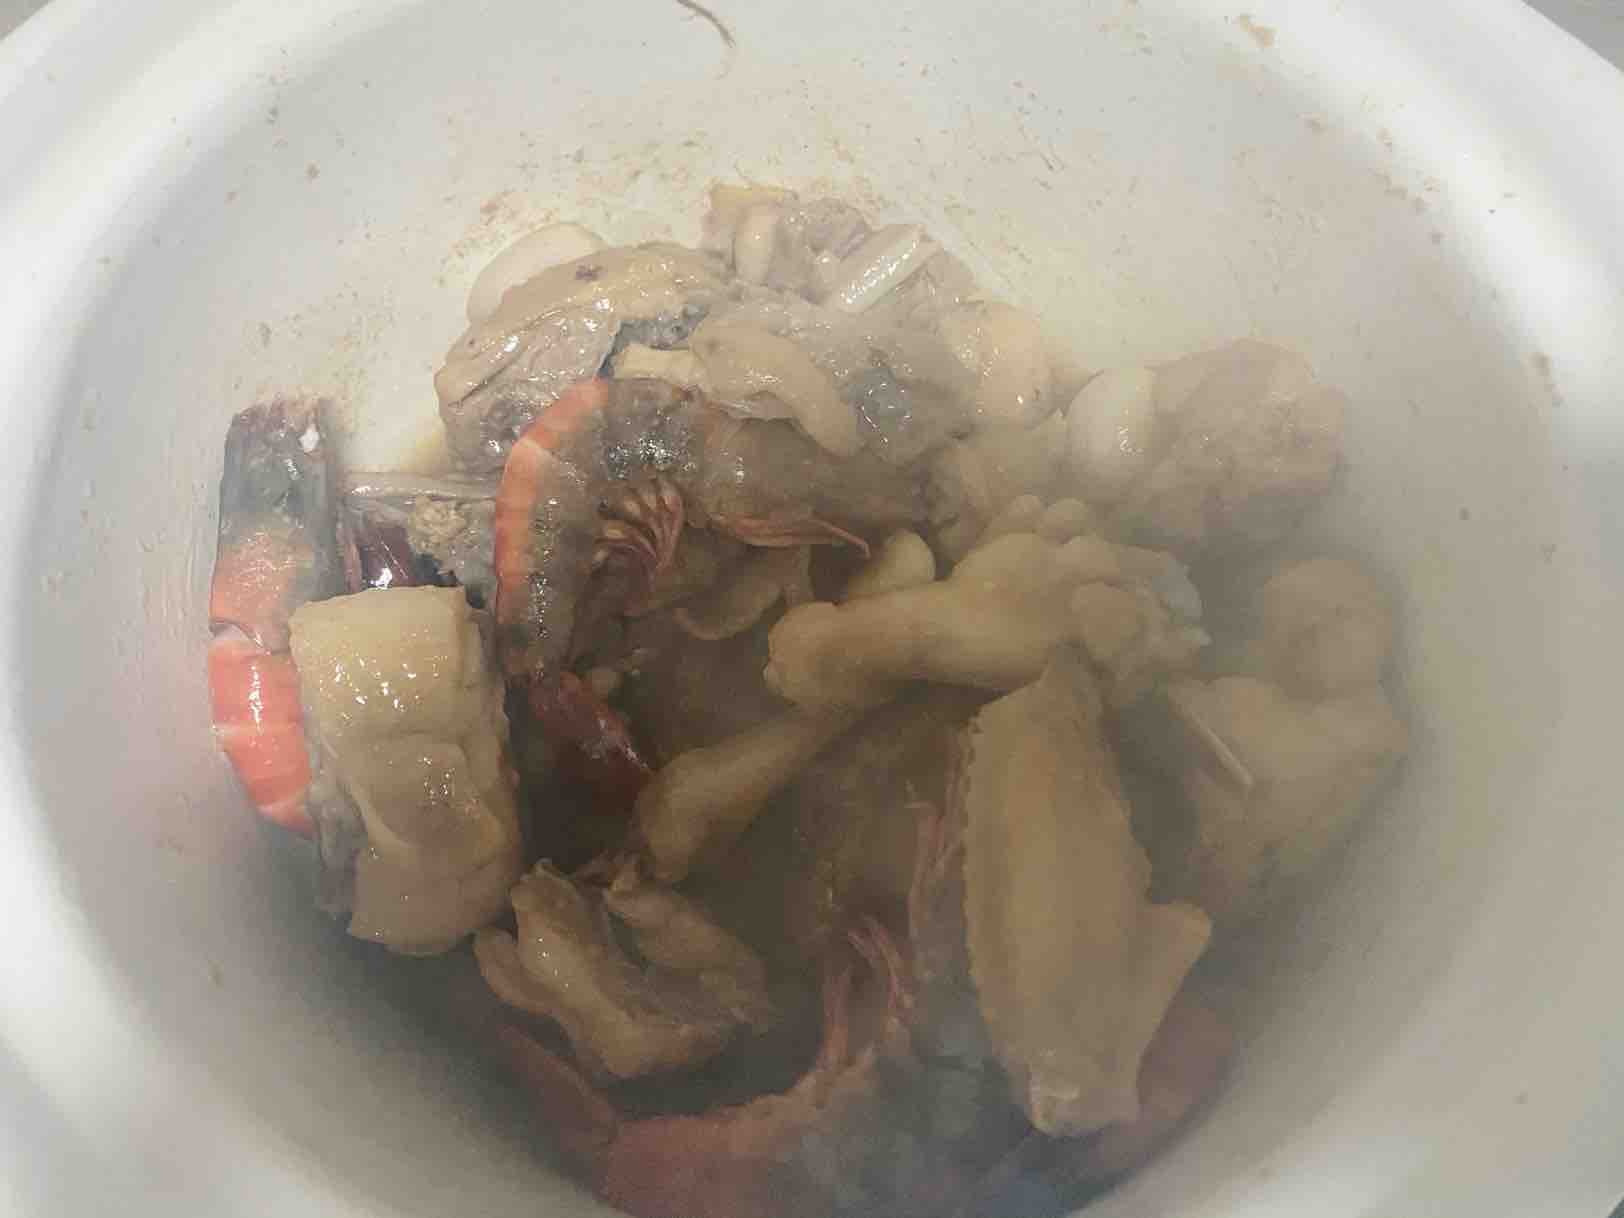 Seafood Chicken Pot recipe